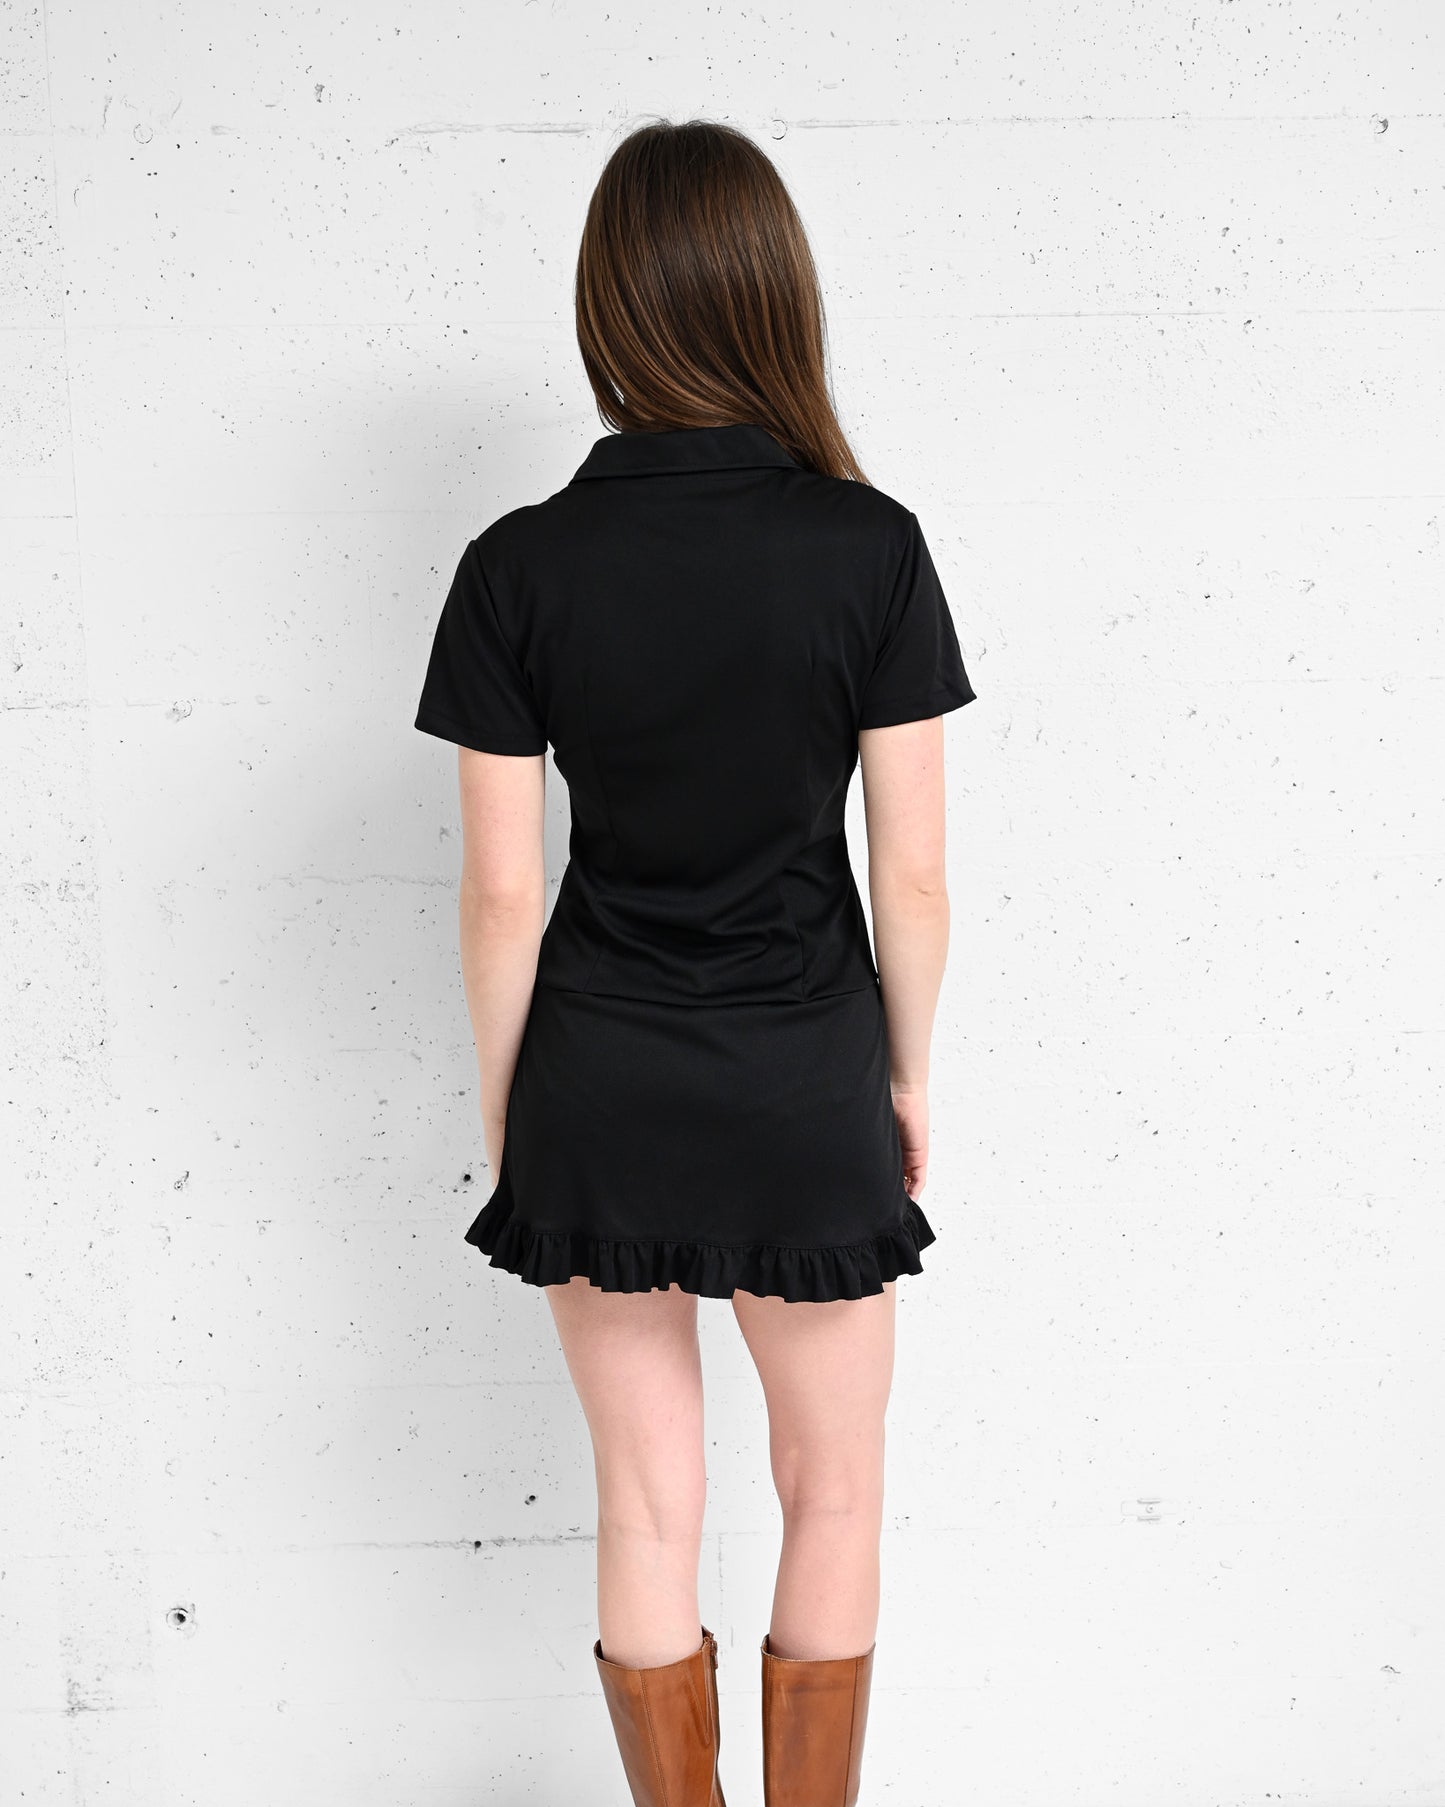 Black Button Up Mini Dress (S-M)